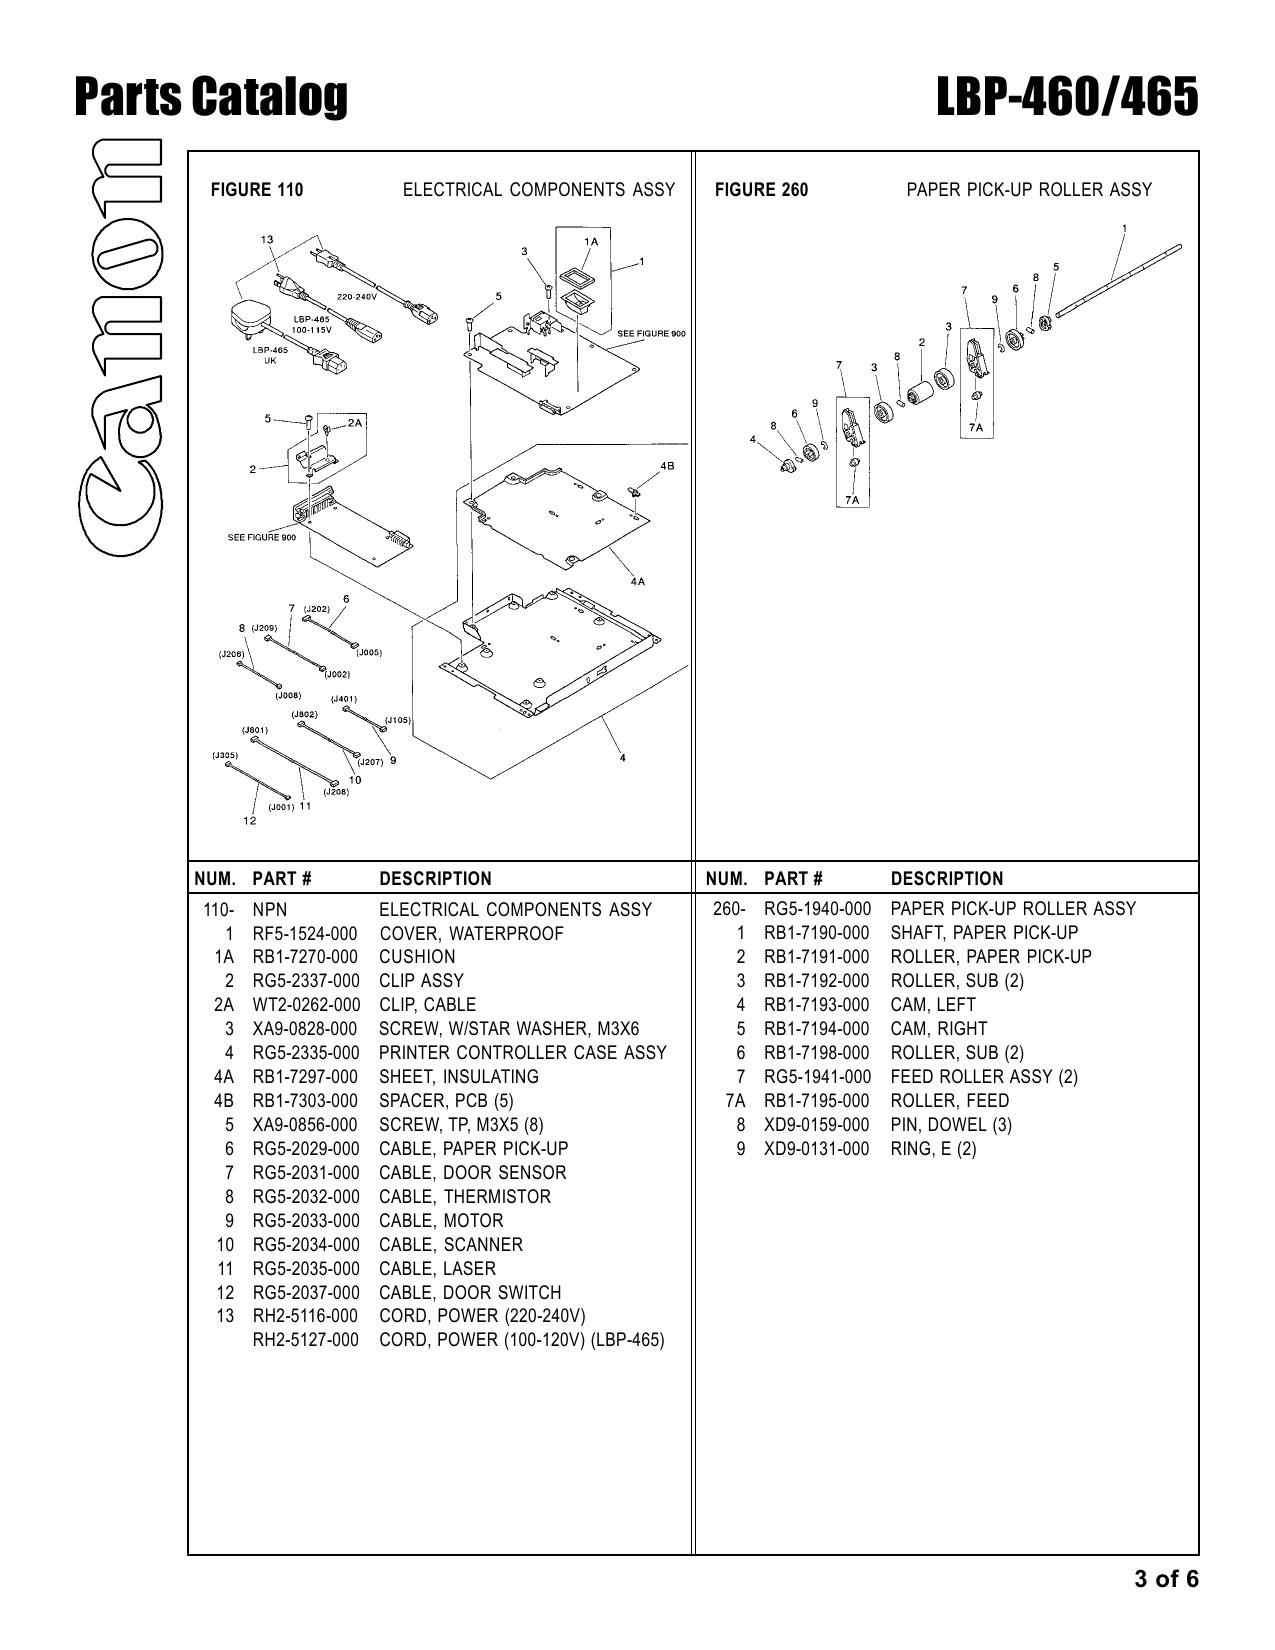 Canon imageCLASS LBP-460 465 Parts Catalog Manual-3